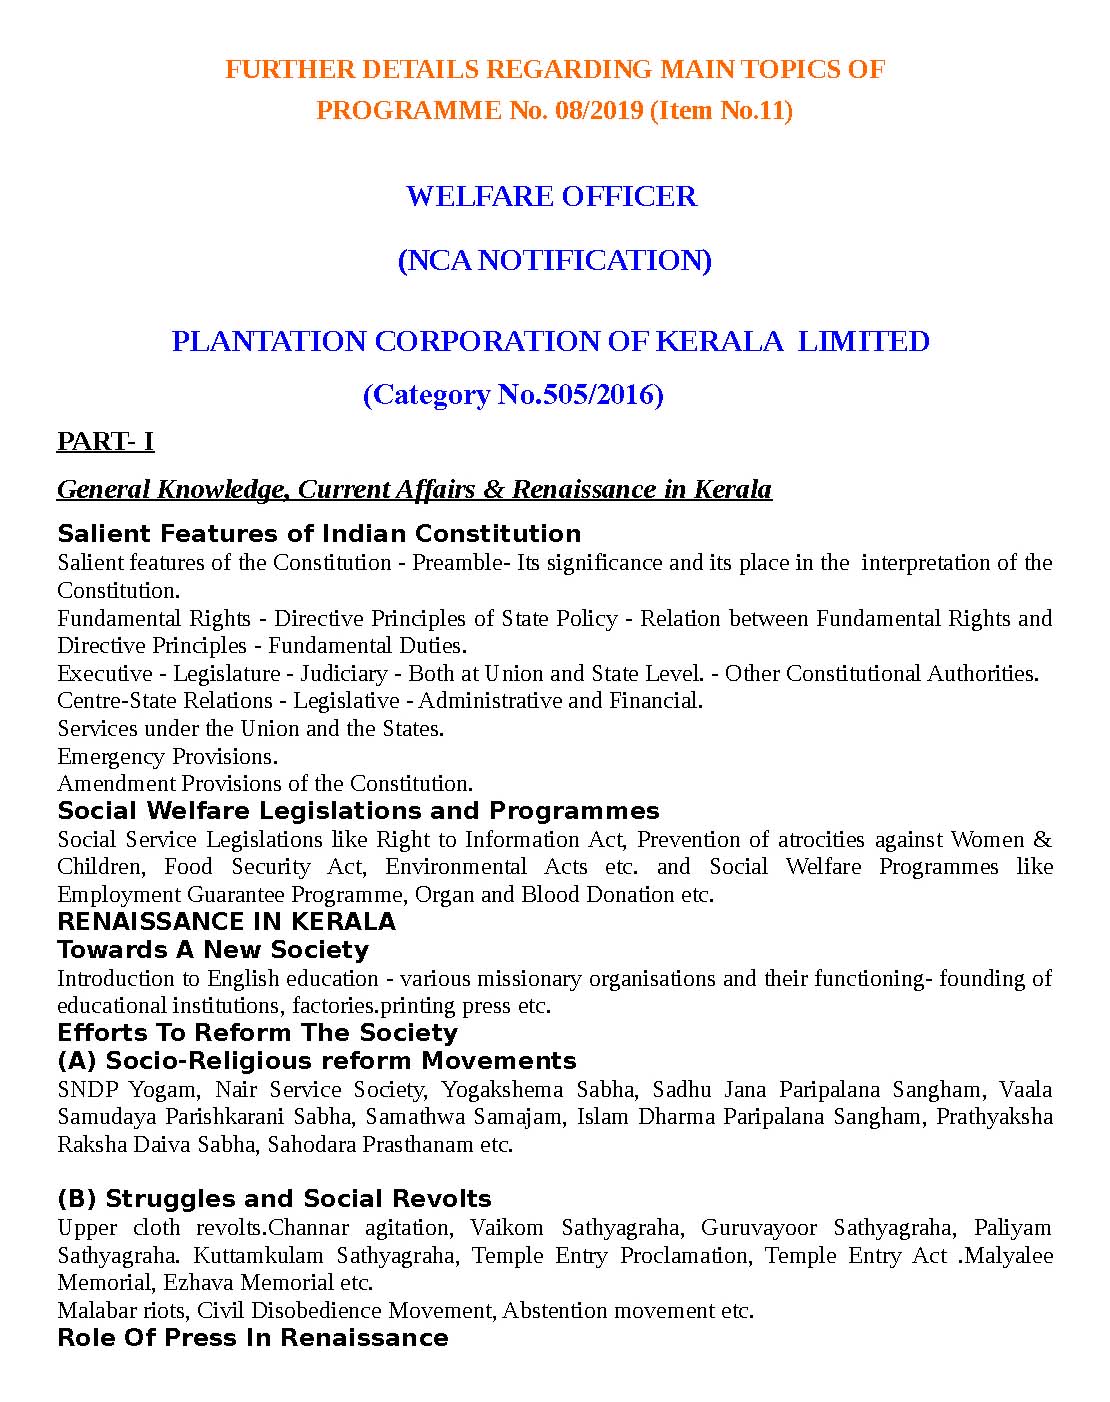 Kerala PSC Syllabus 2019 Welfare Officer - Notification Image 1